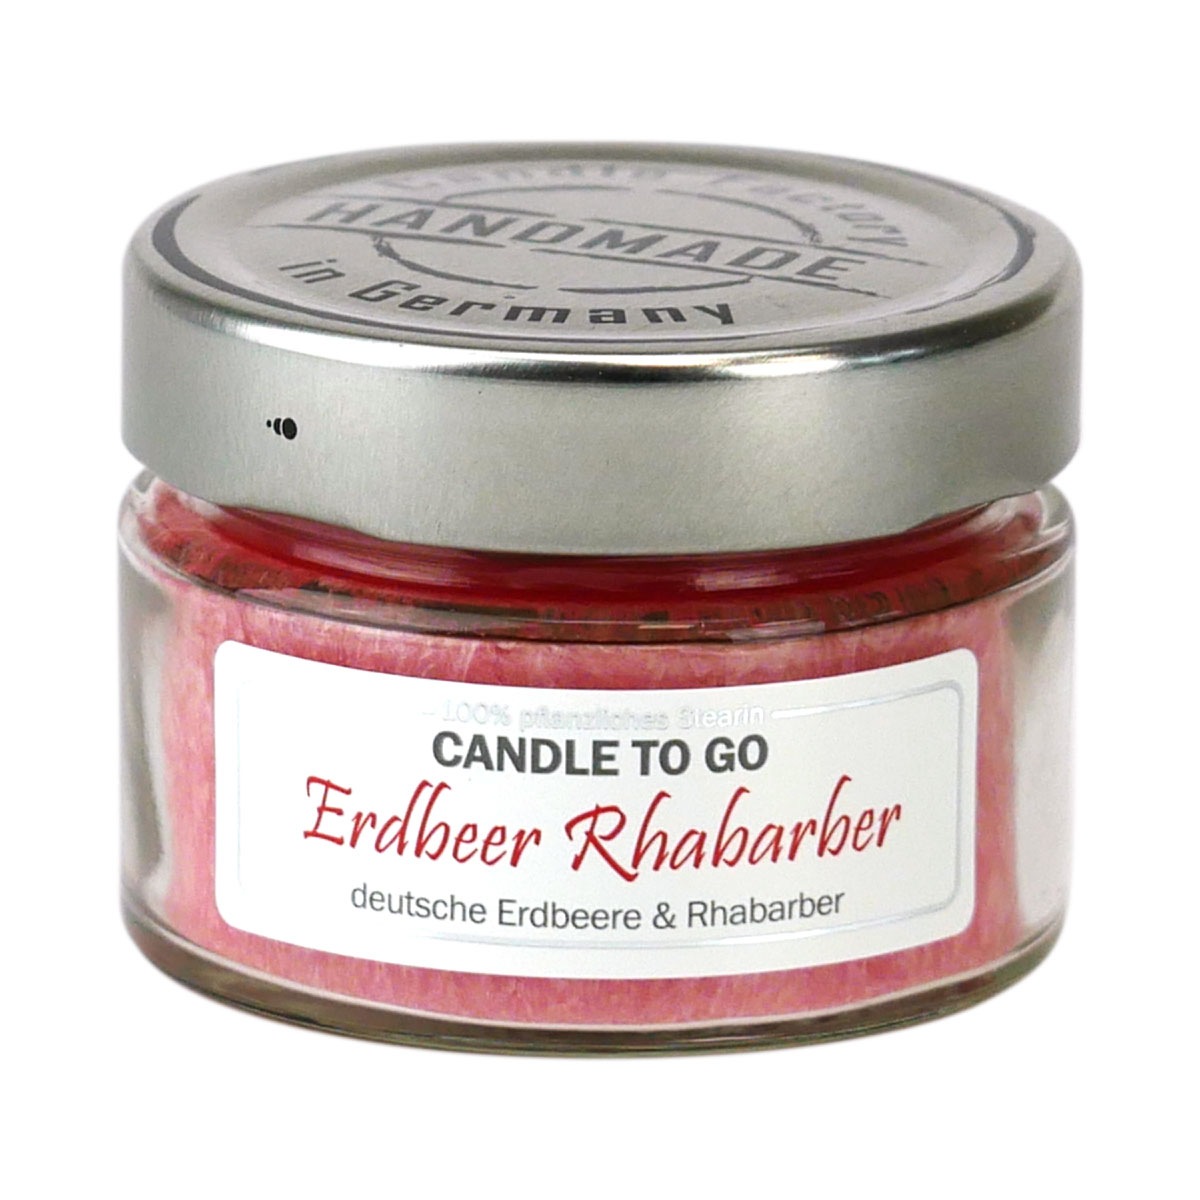 Erdbeer Rhabarber - Candle to Go die Duftkerze für unterwegs